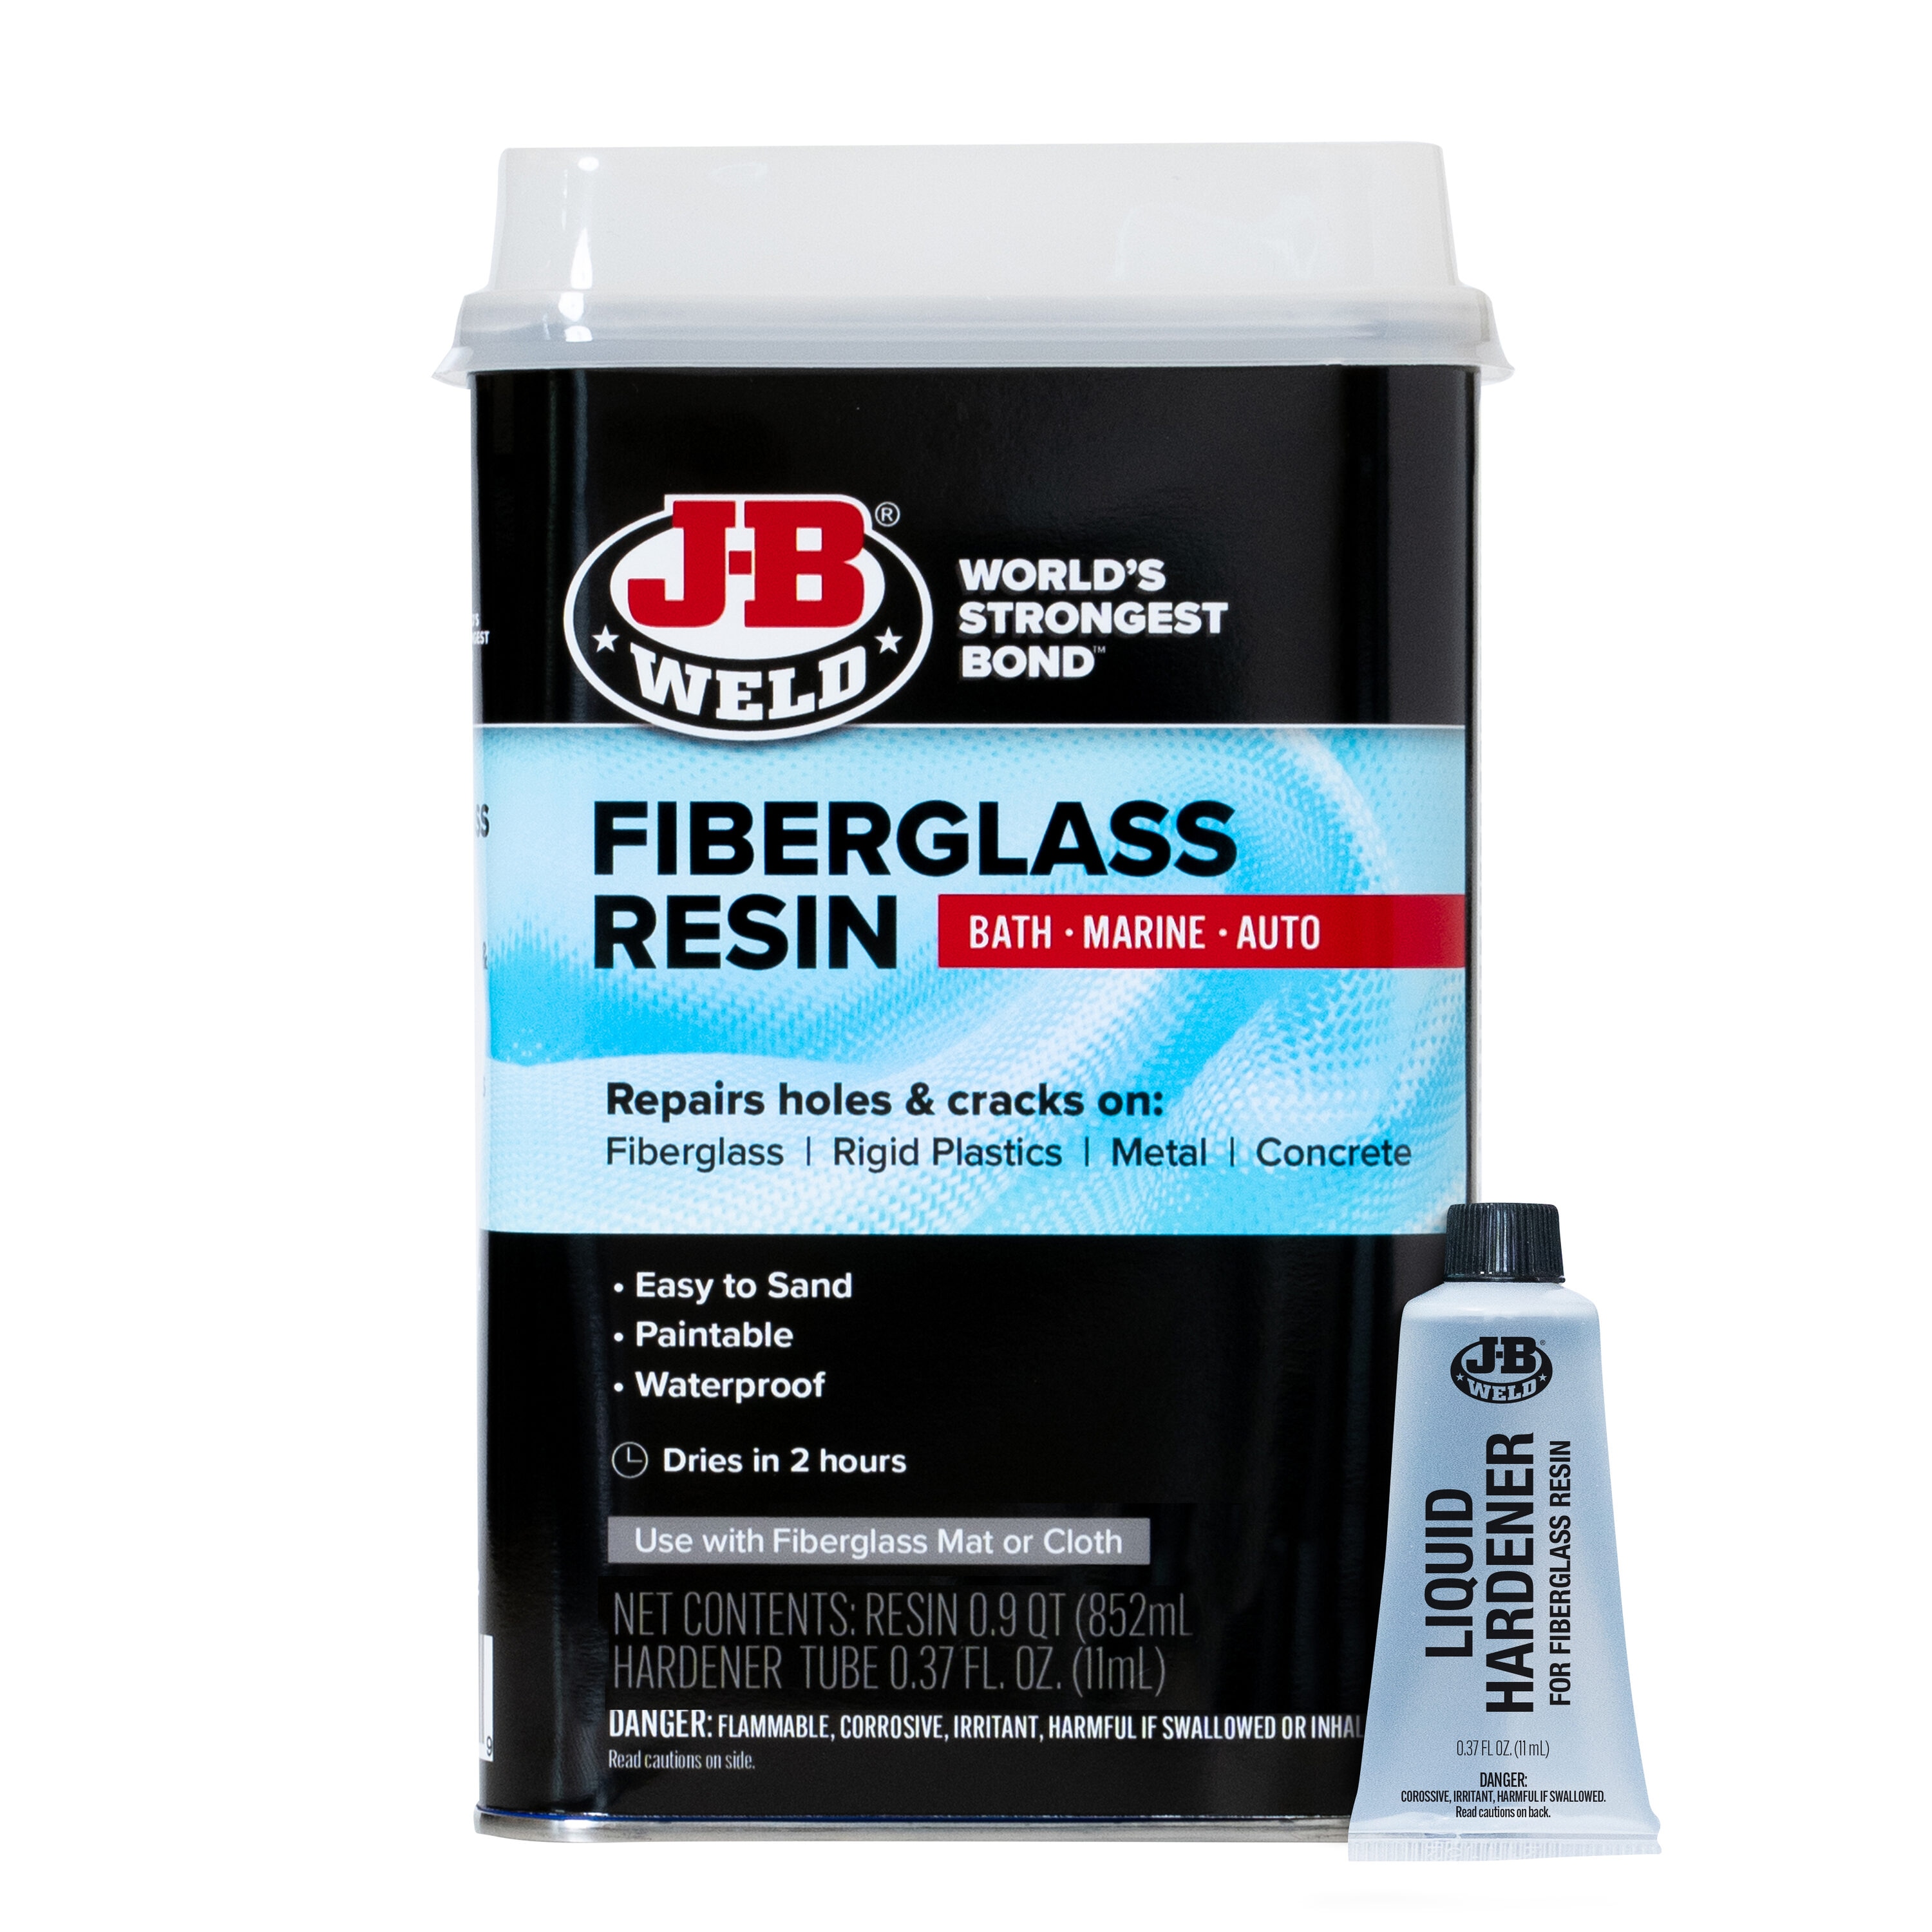 Fiberglass Resin - Fibreglass Resin Latest Price, Manufacturers & Suppliers